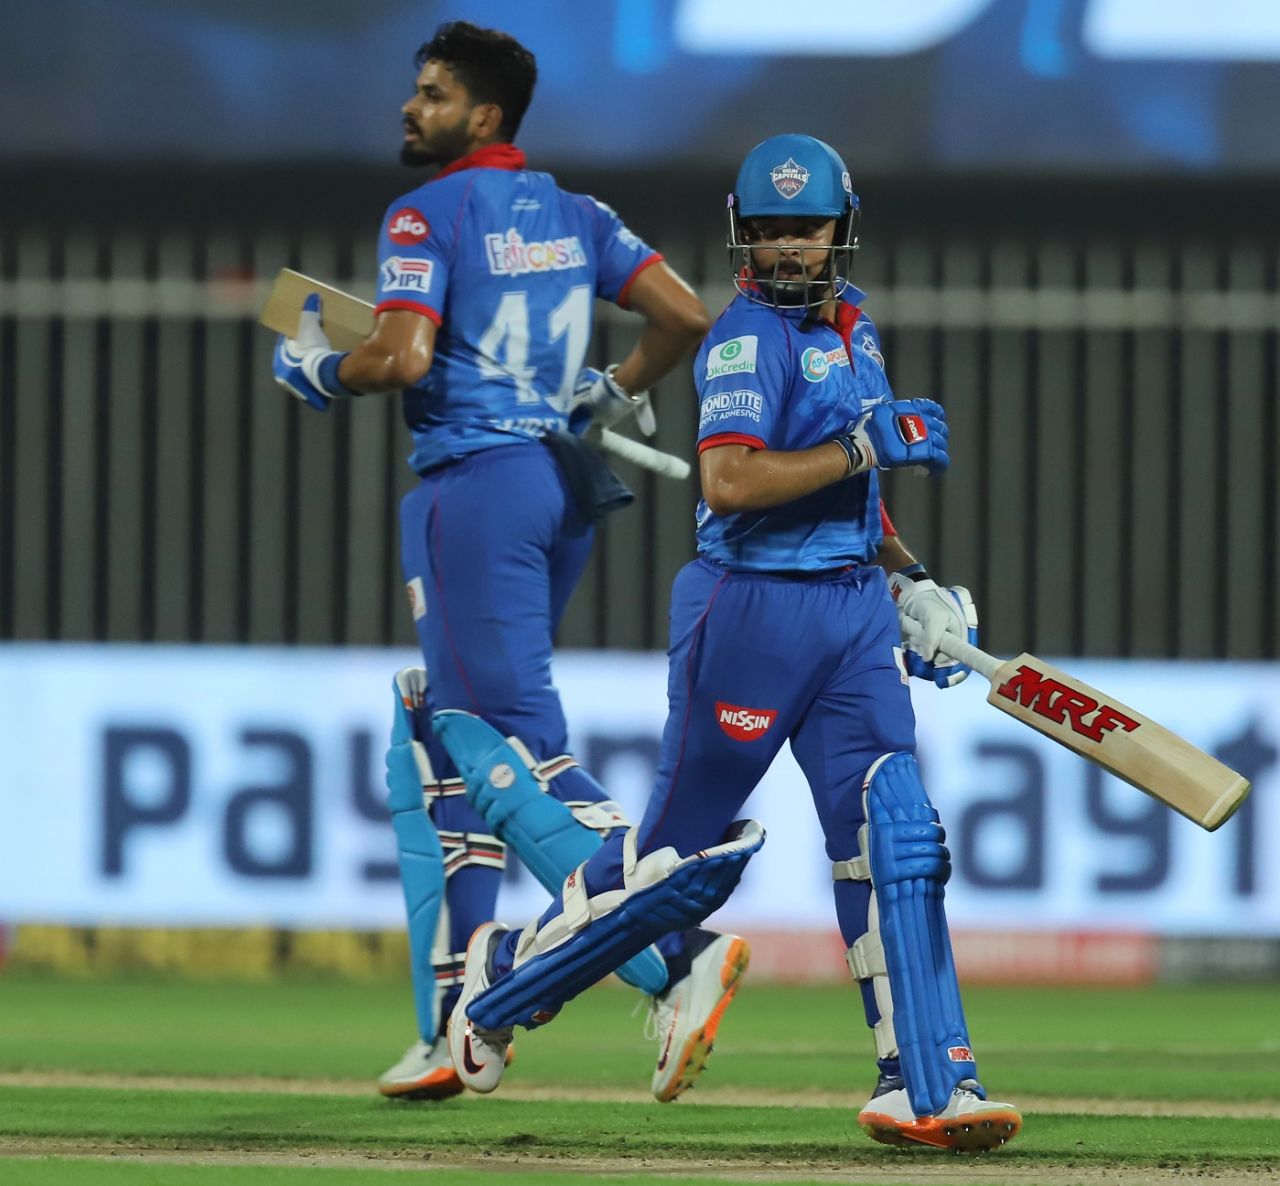 Prithvi Shaw and Shreyas Iyer added 73 runs for the second wicket, Delhi Capitals vs Kolkata Knight Riders, IPL 2020, Sharjah, October 3, 2020